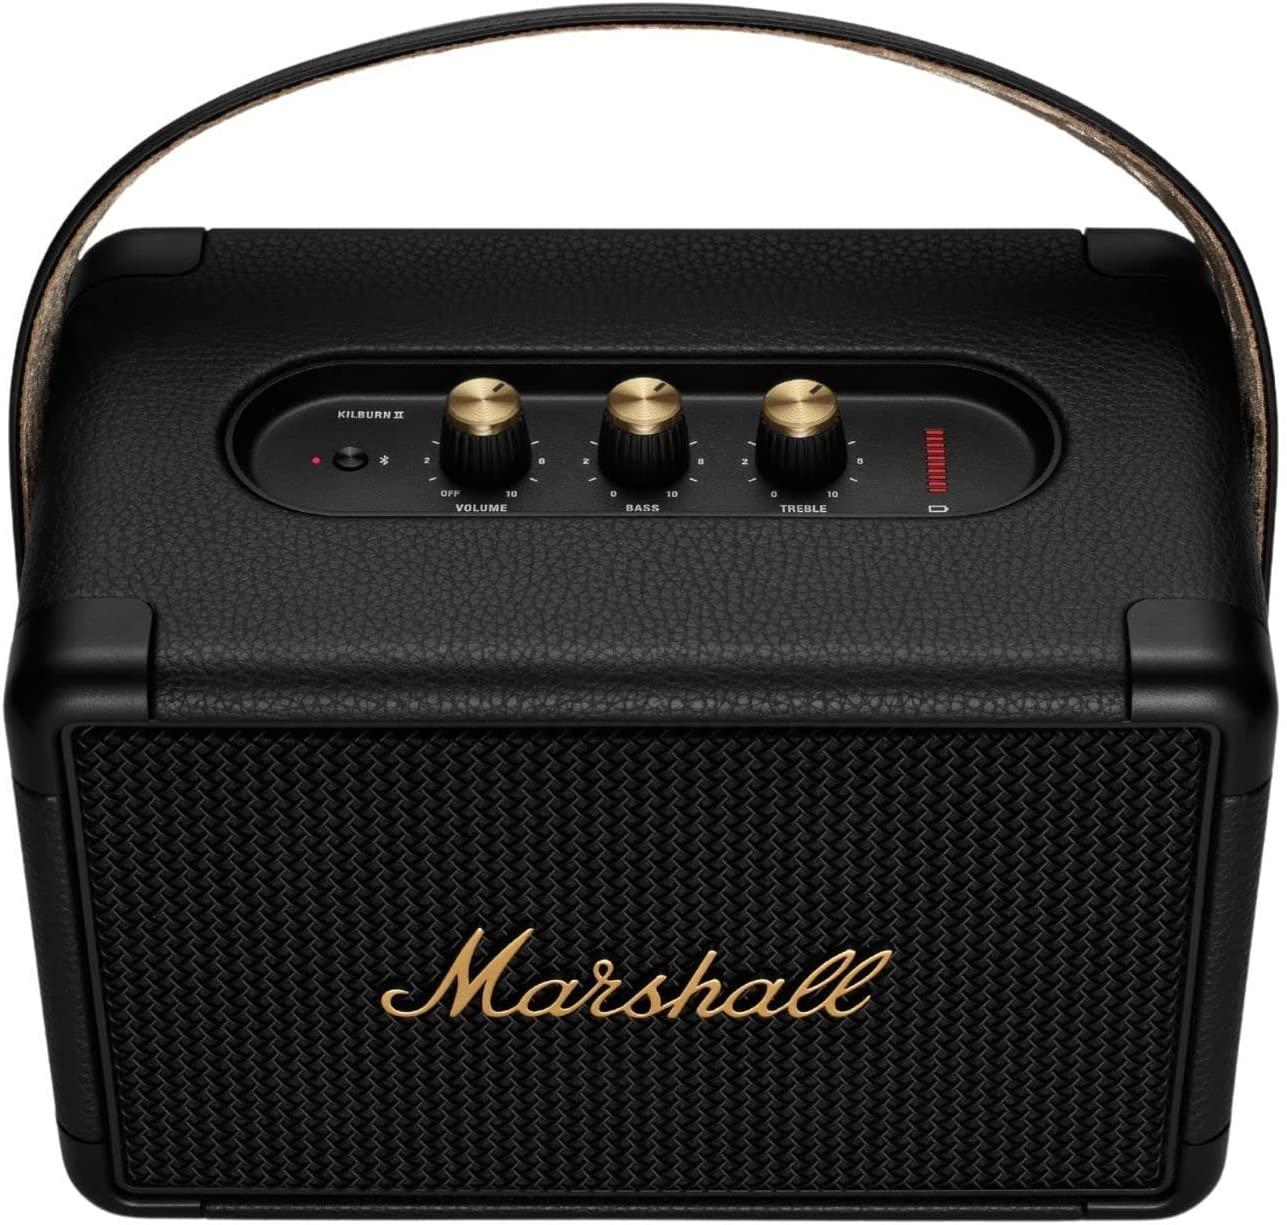 Marshall Kilburn Black Bluetooth - Brass & Portable Brass II Speaker Black Speaker and